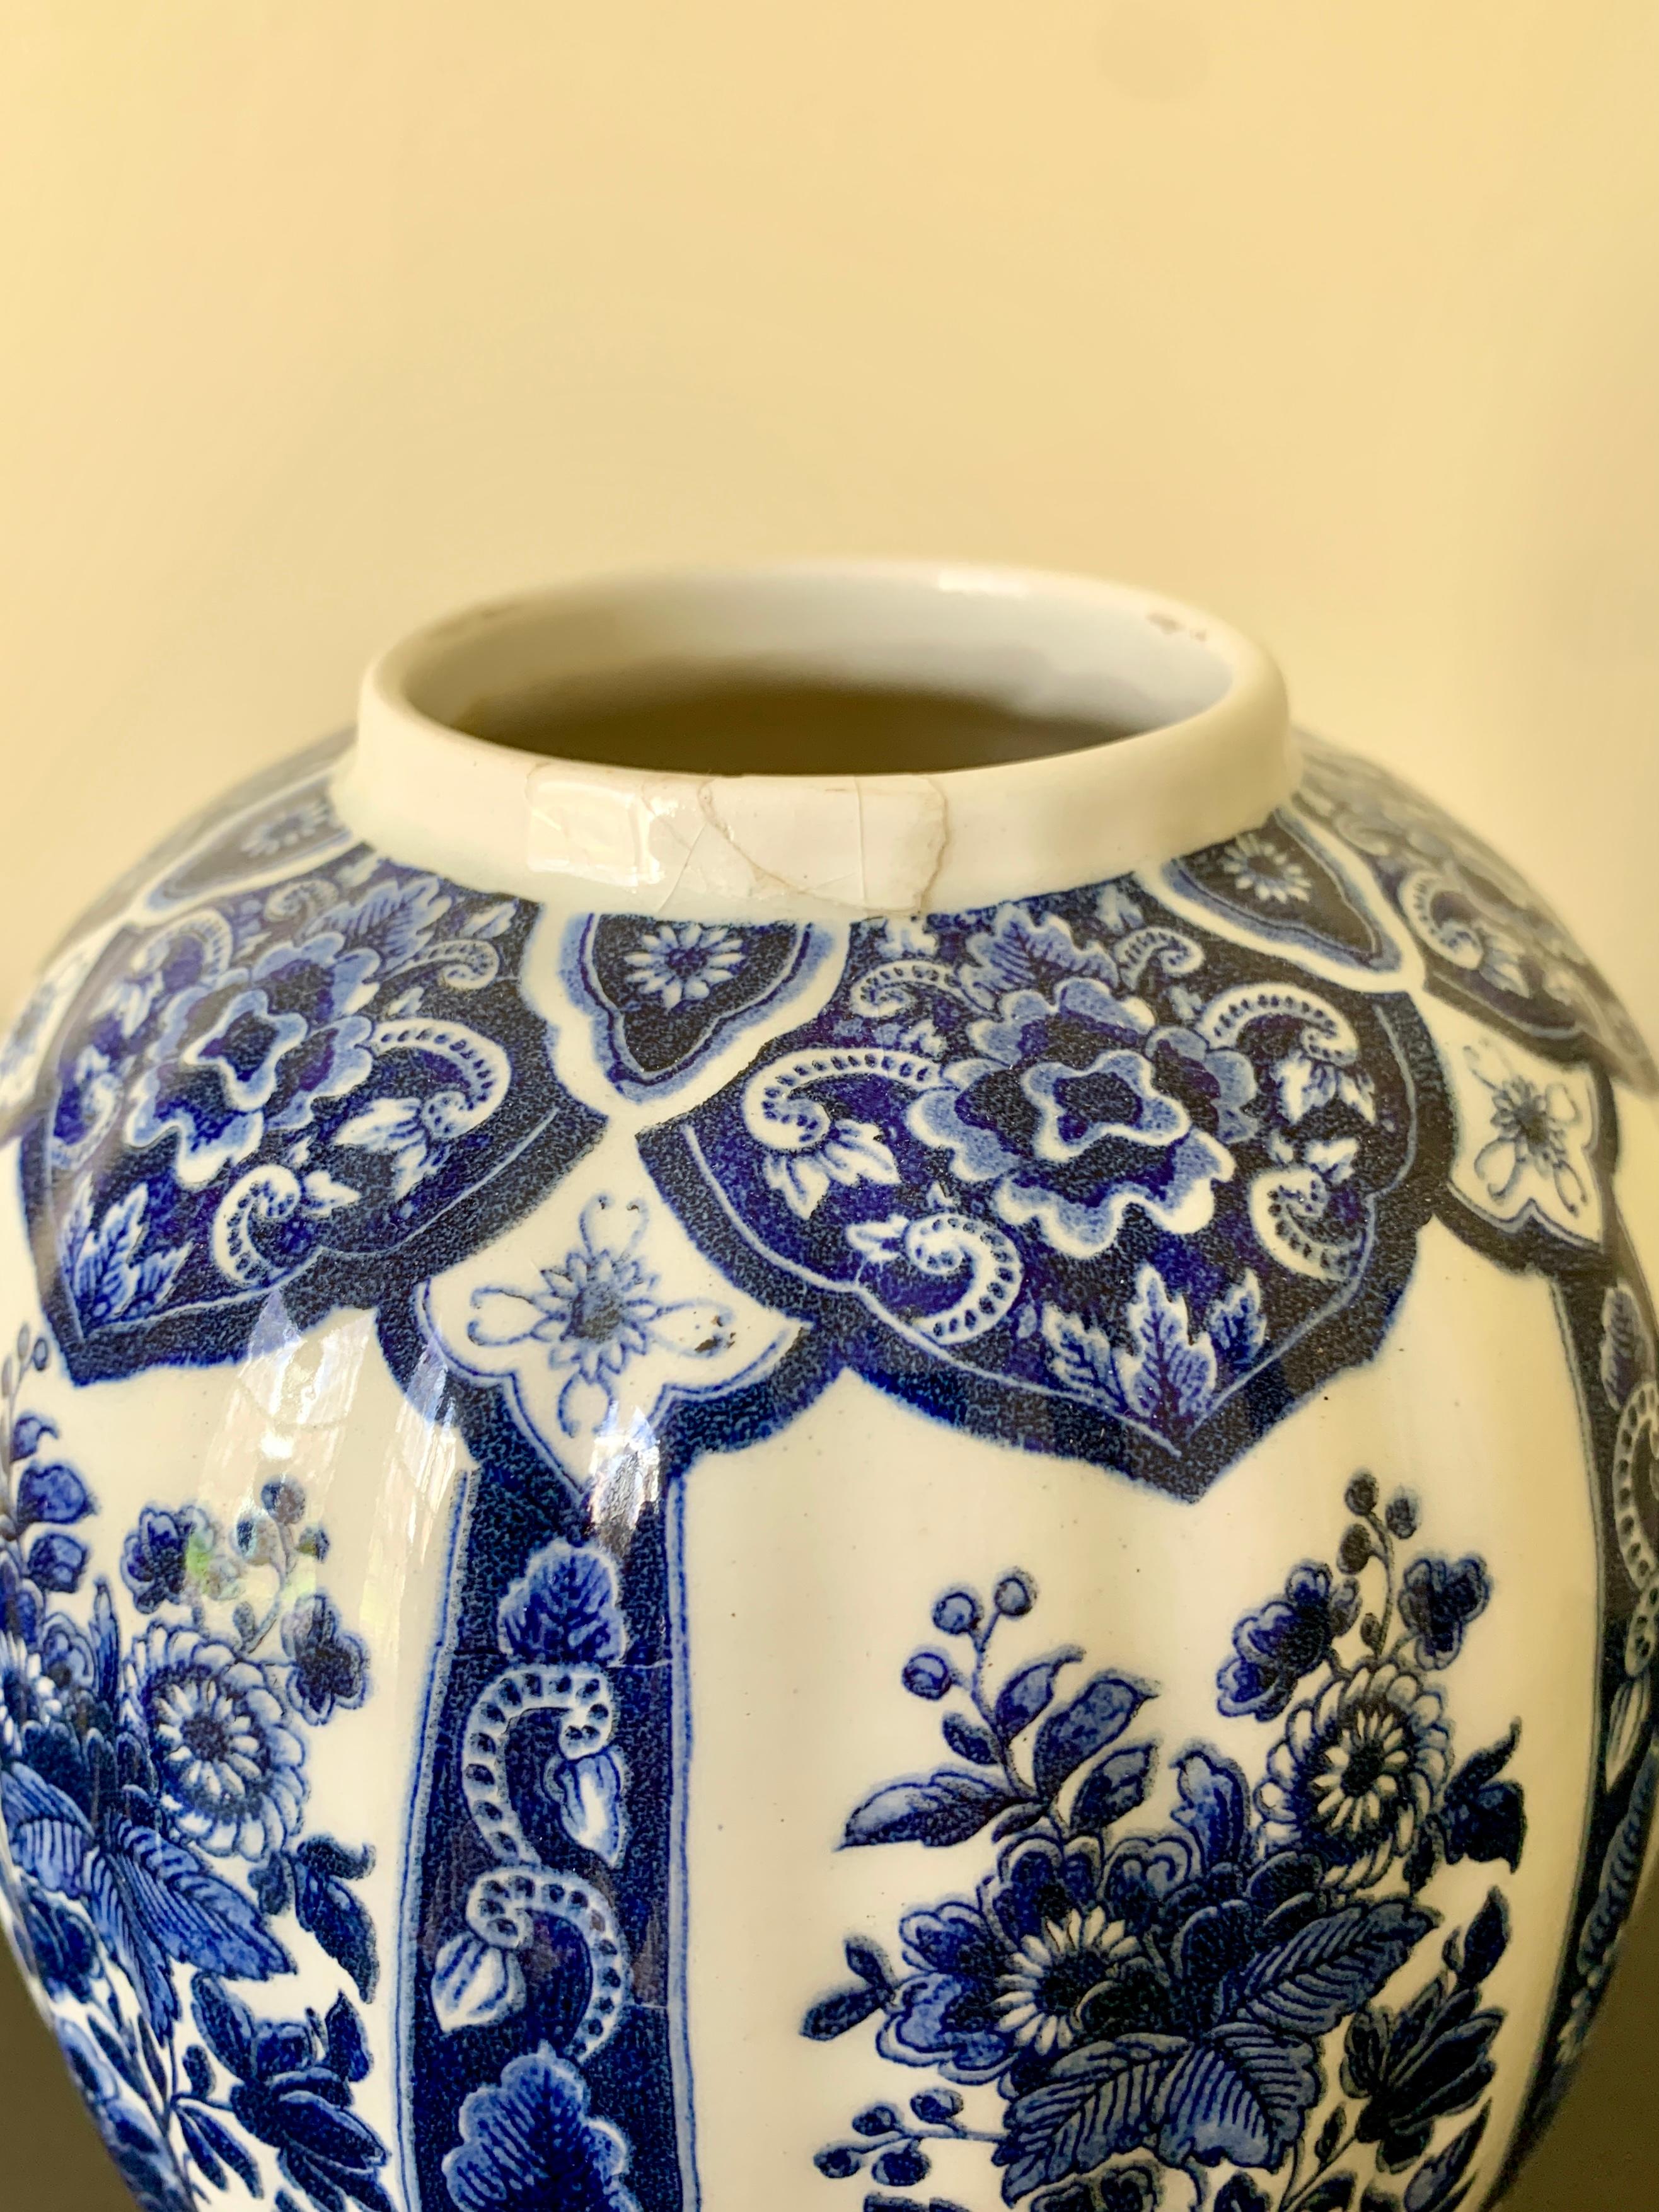 Delfts Blue and White Chinoiserie Porcelain Ginger Jar by Ardalt Blue Delfia For Sale 2